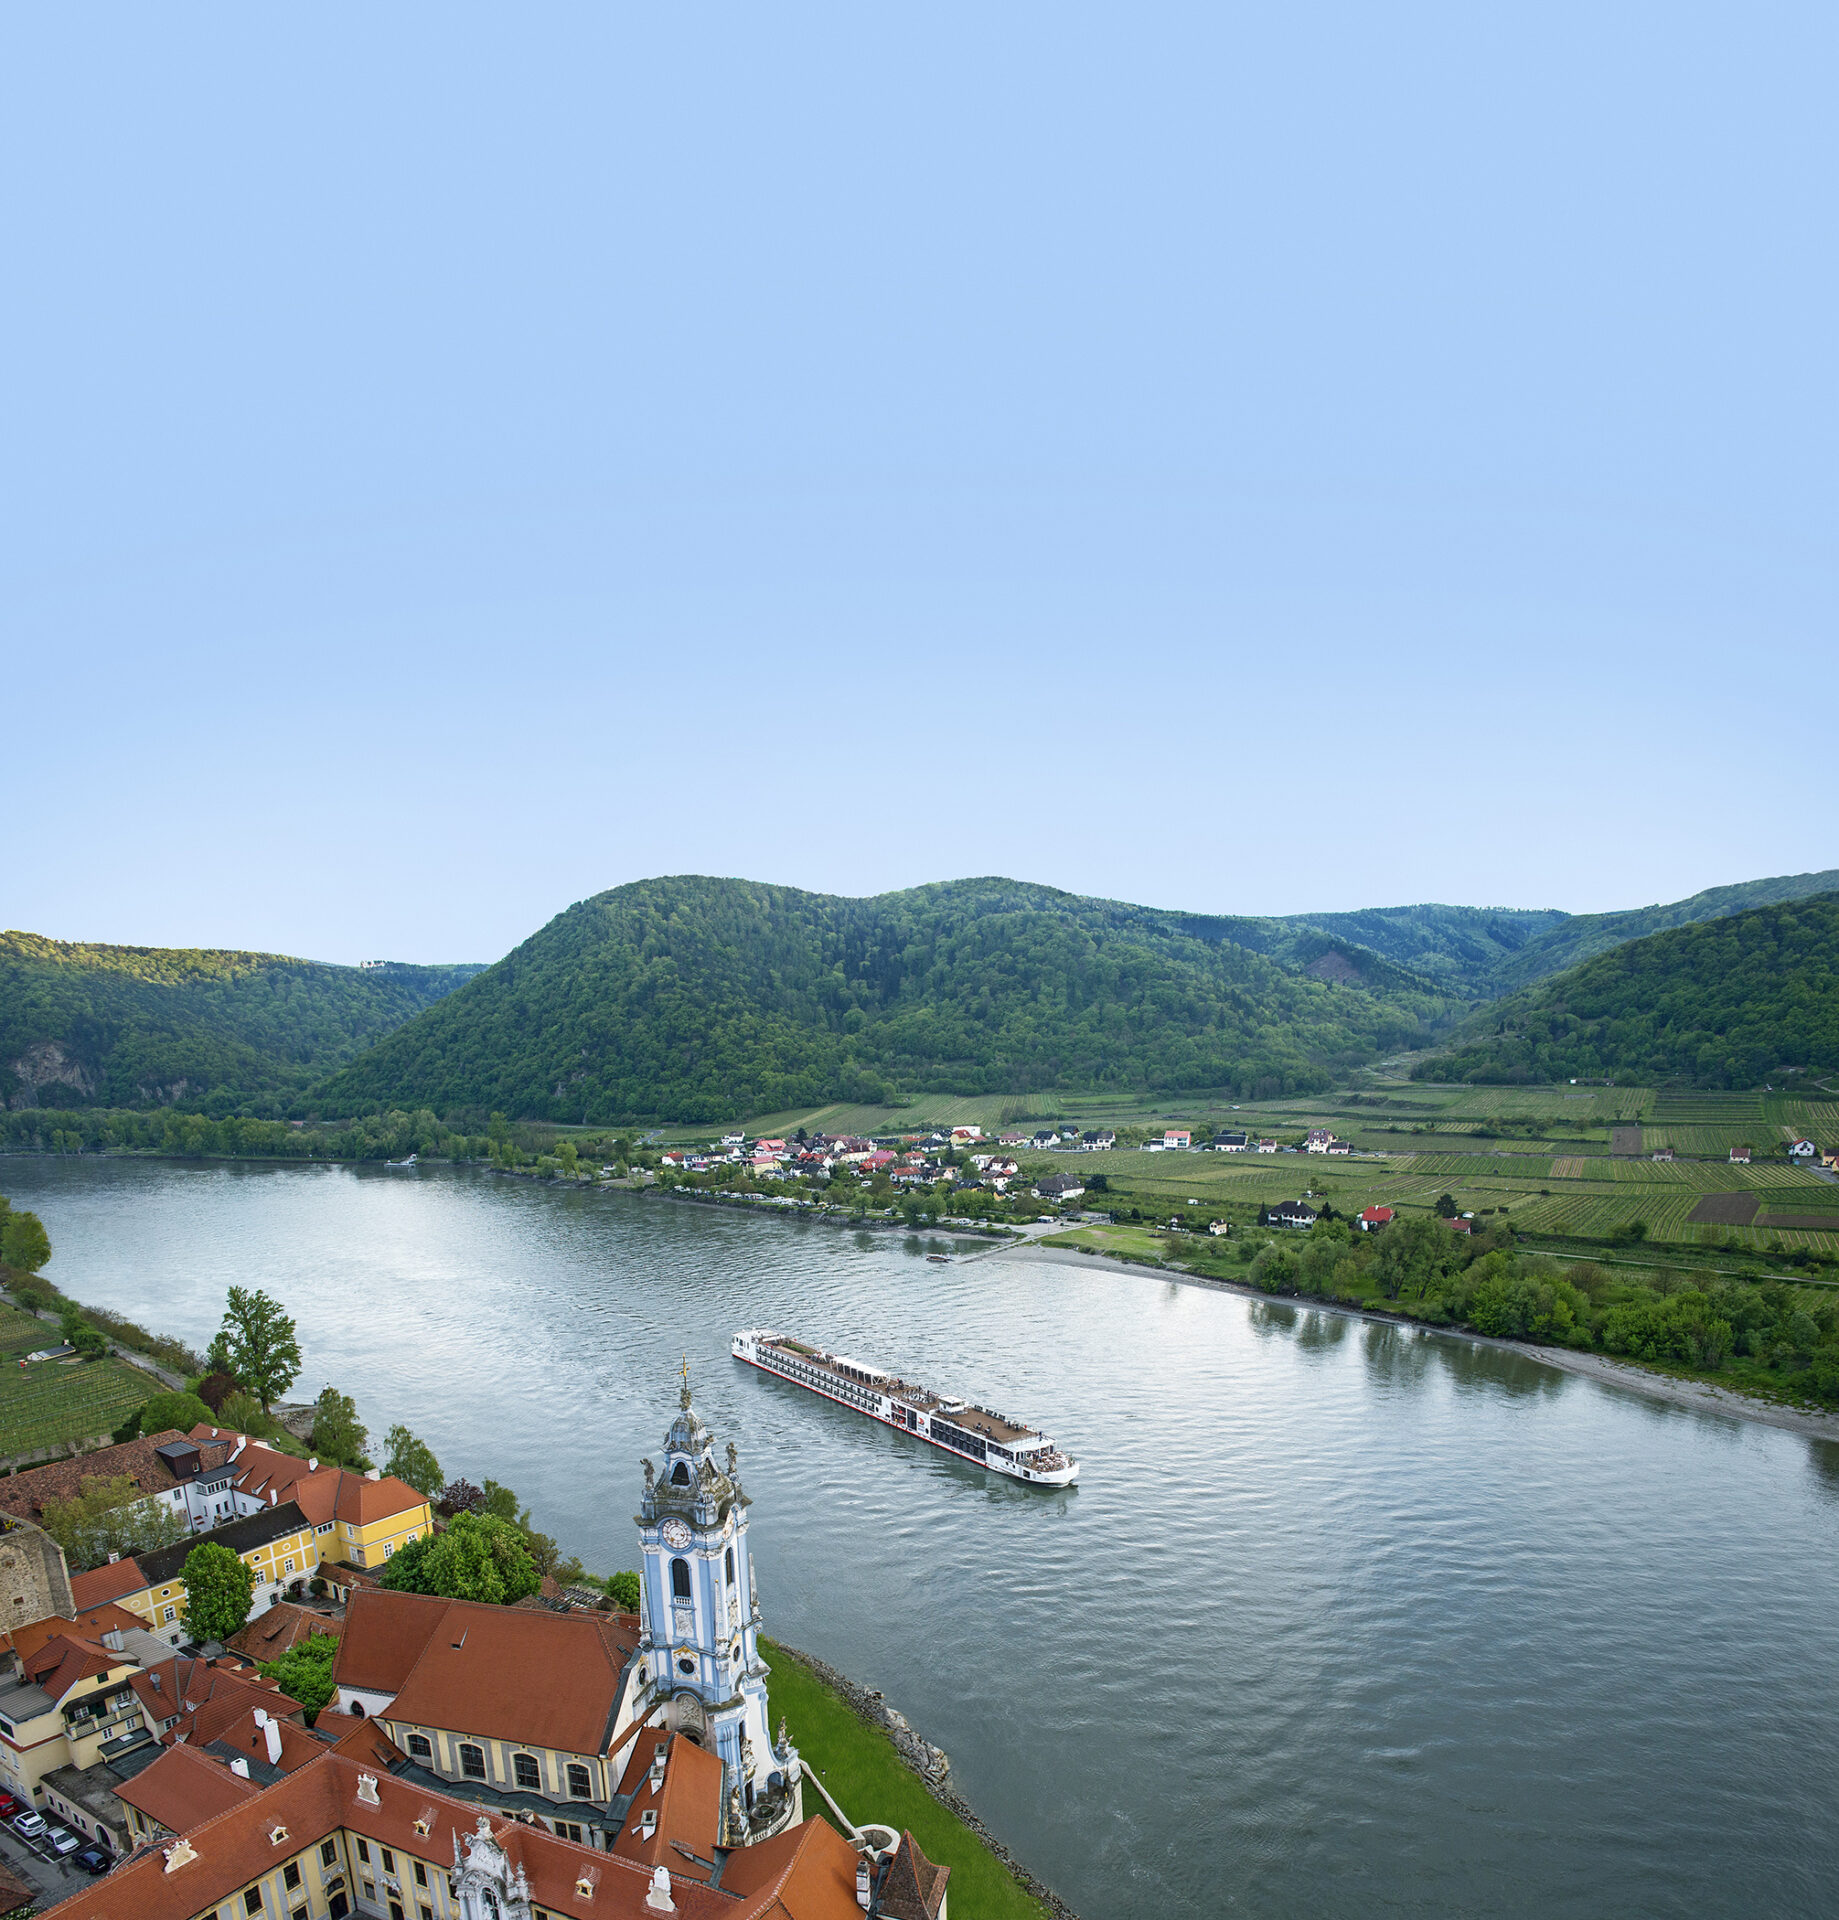 The Viking Longship Njord near the town of Durnstein on the Danube River.